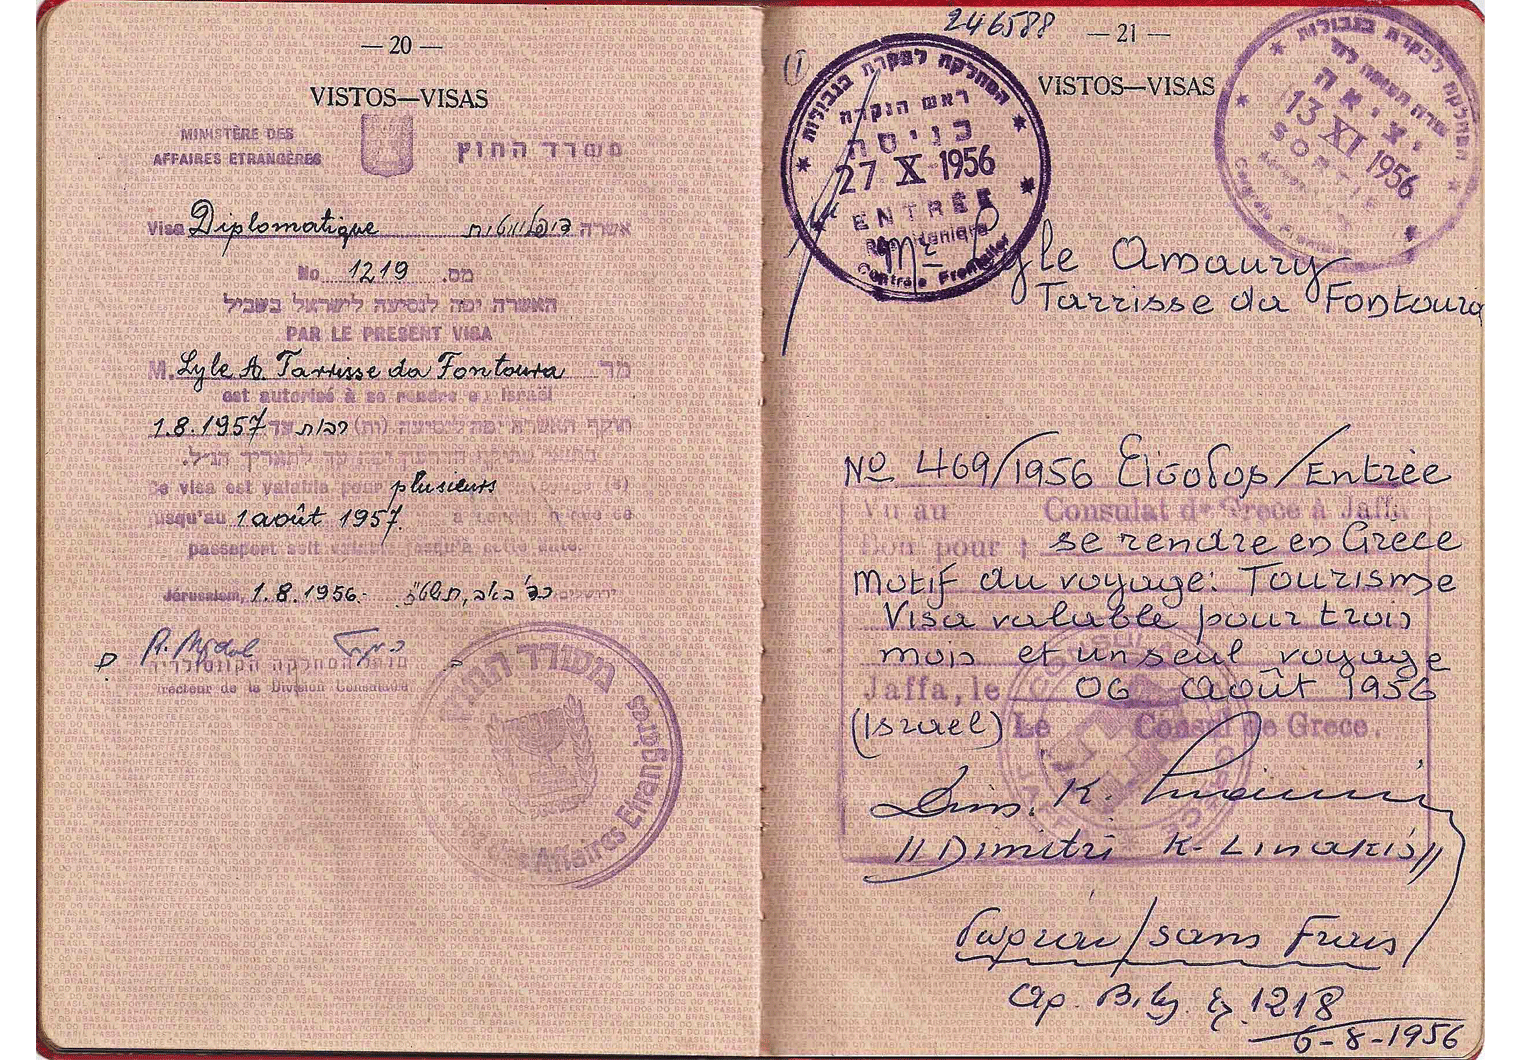 Superb 1954 diplomatic passports